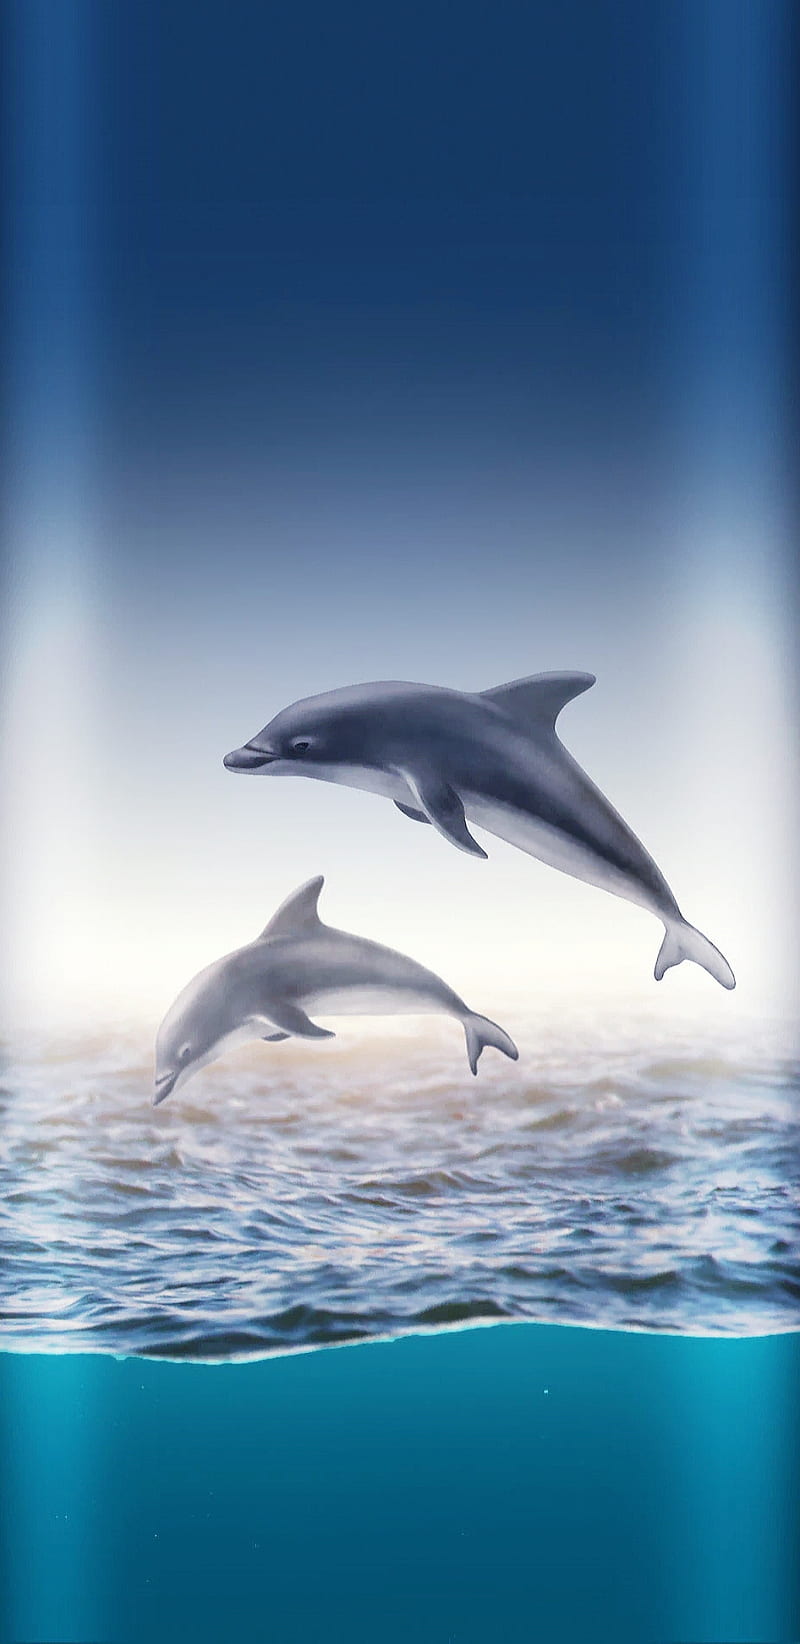 Total 95+ images fondos de escritorio gratis de delfines - Viaterra.mx